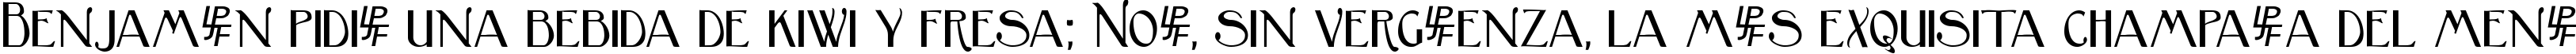 Пример написания шрифтом Birmingham Sans Serif текста на испанском